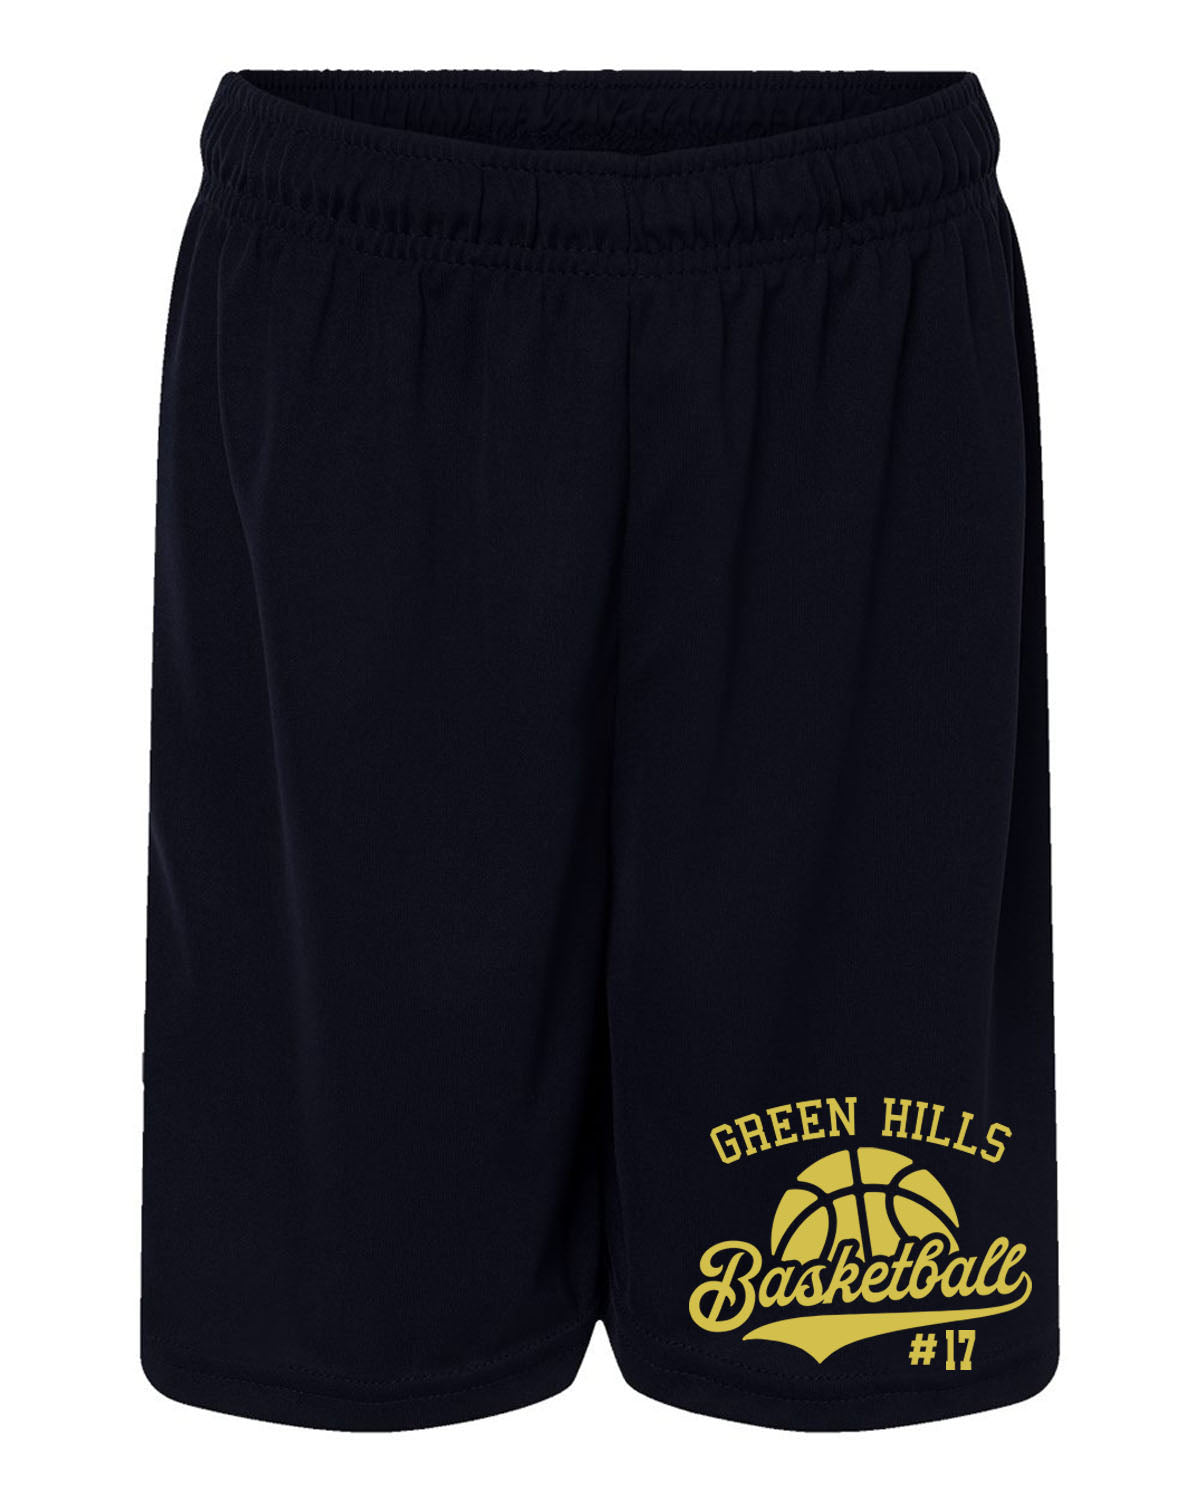 Green Hills Basketball Design 6 Performance Shorts